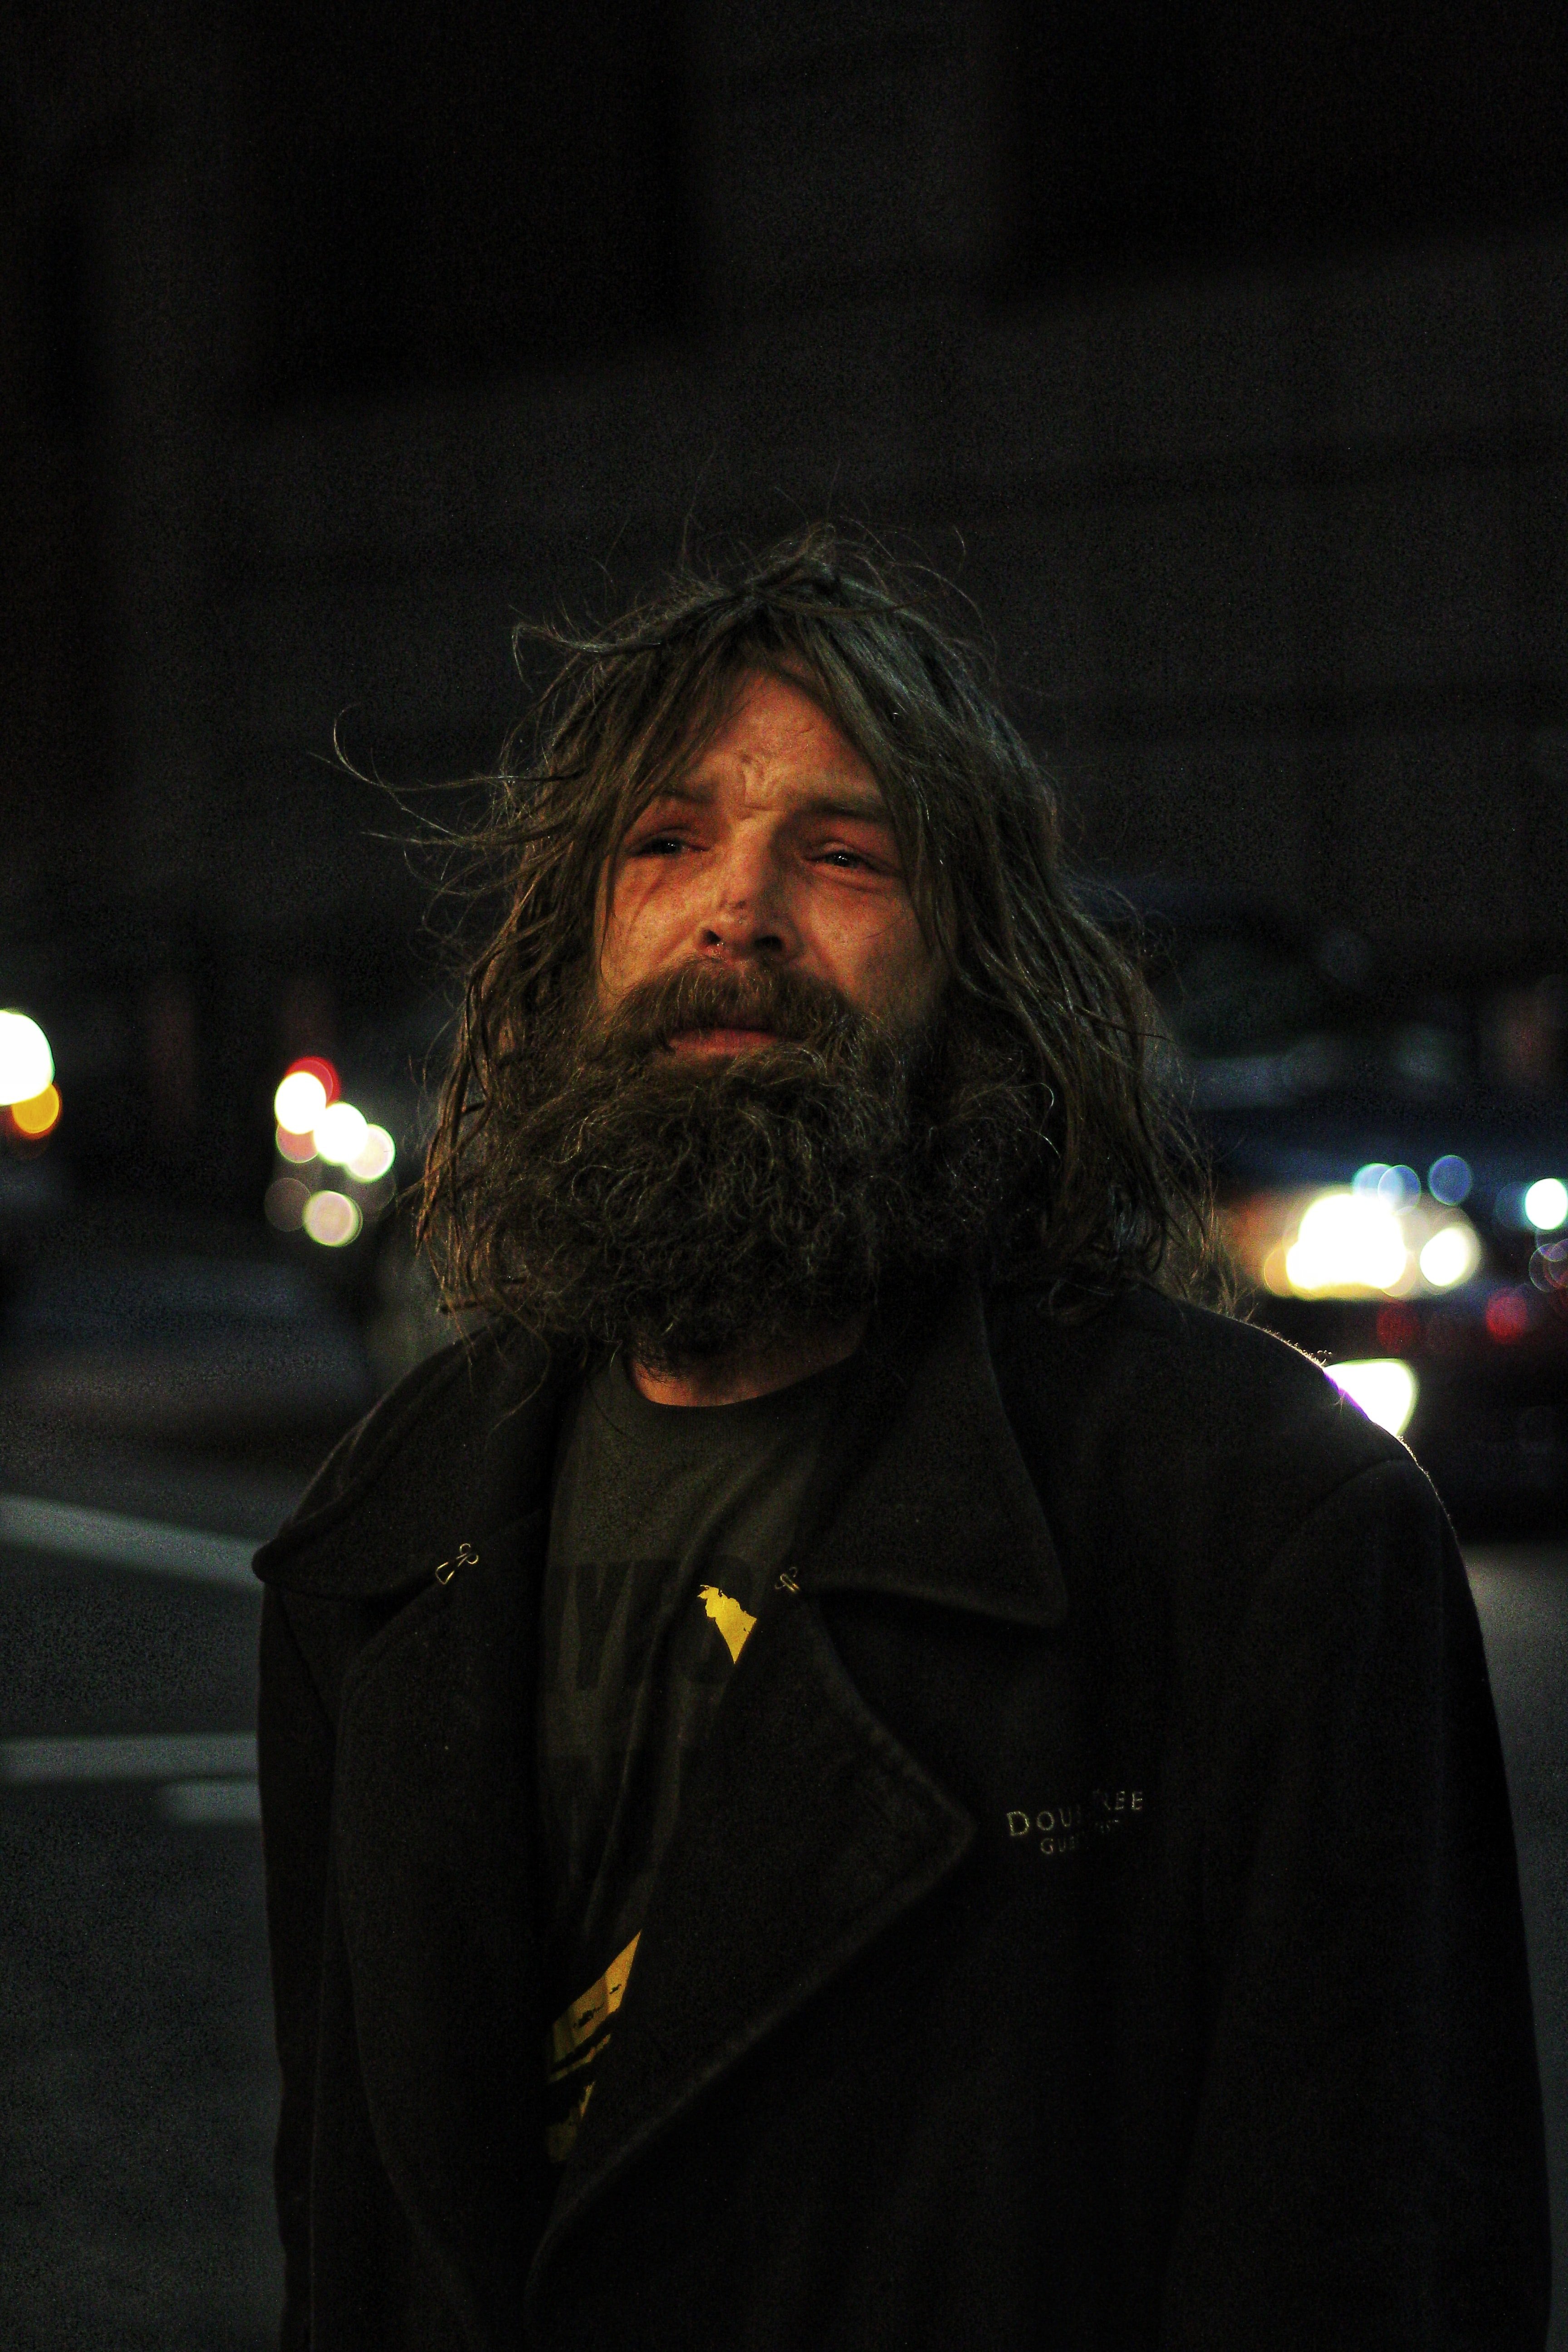 Joseph became homeless after losing his restaurant. | Source: Unsplash